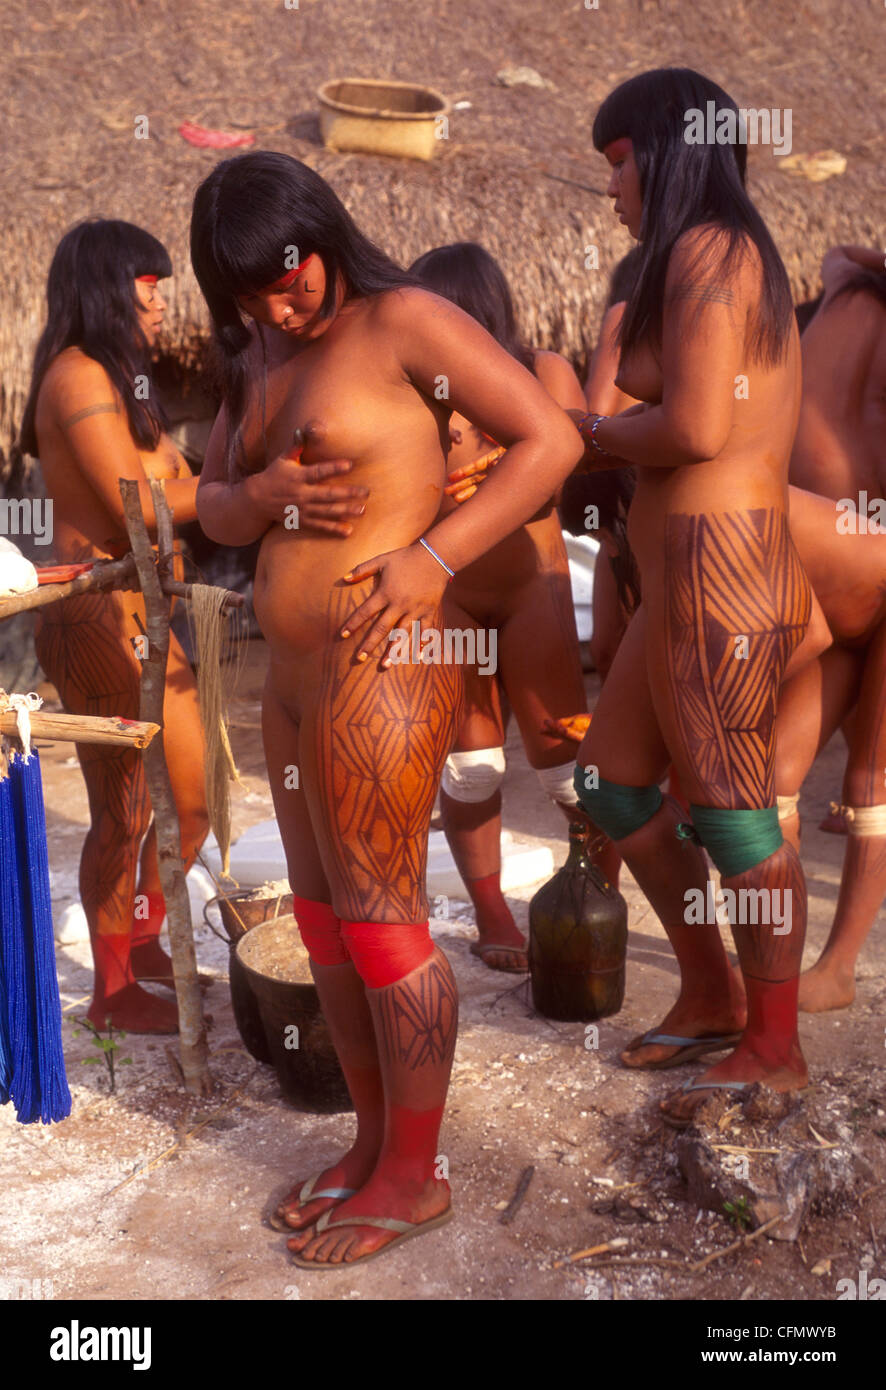 Секс с индейками из племени (88 фото)